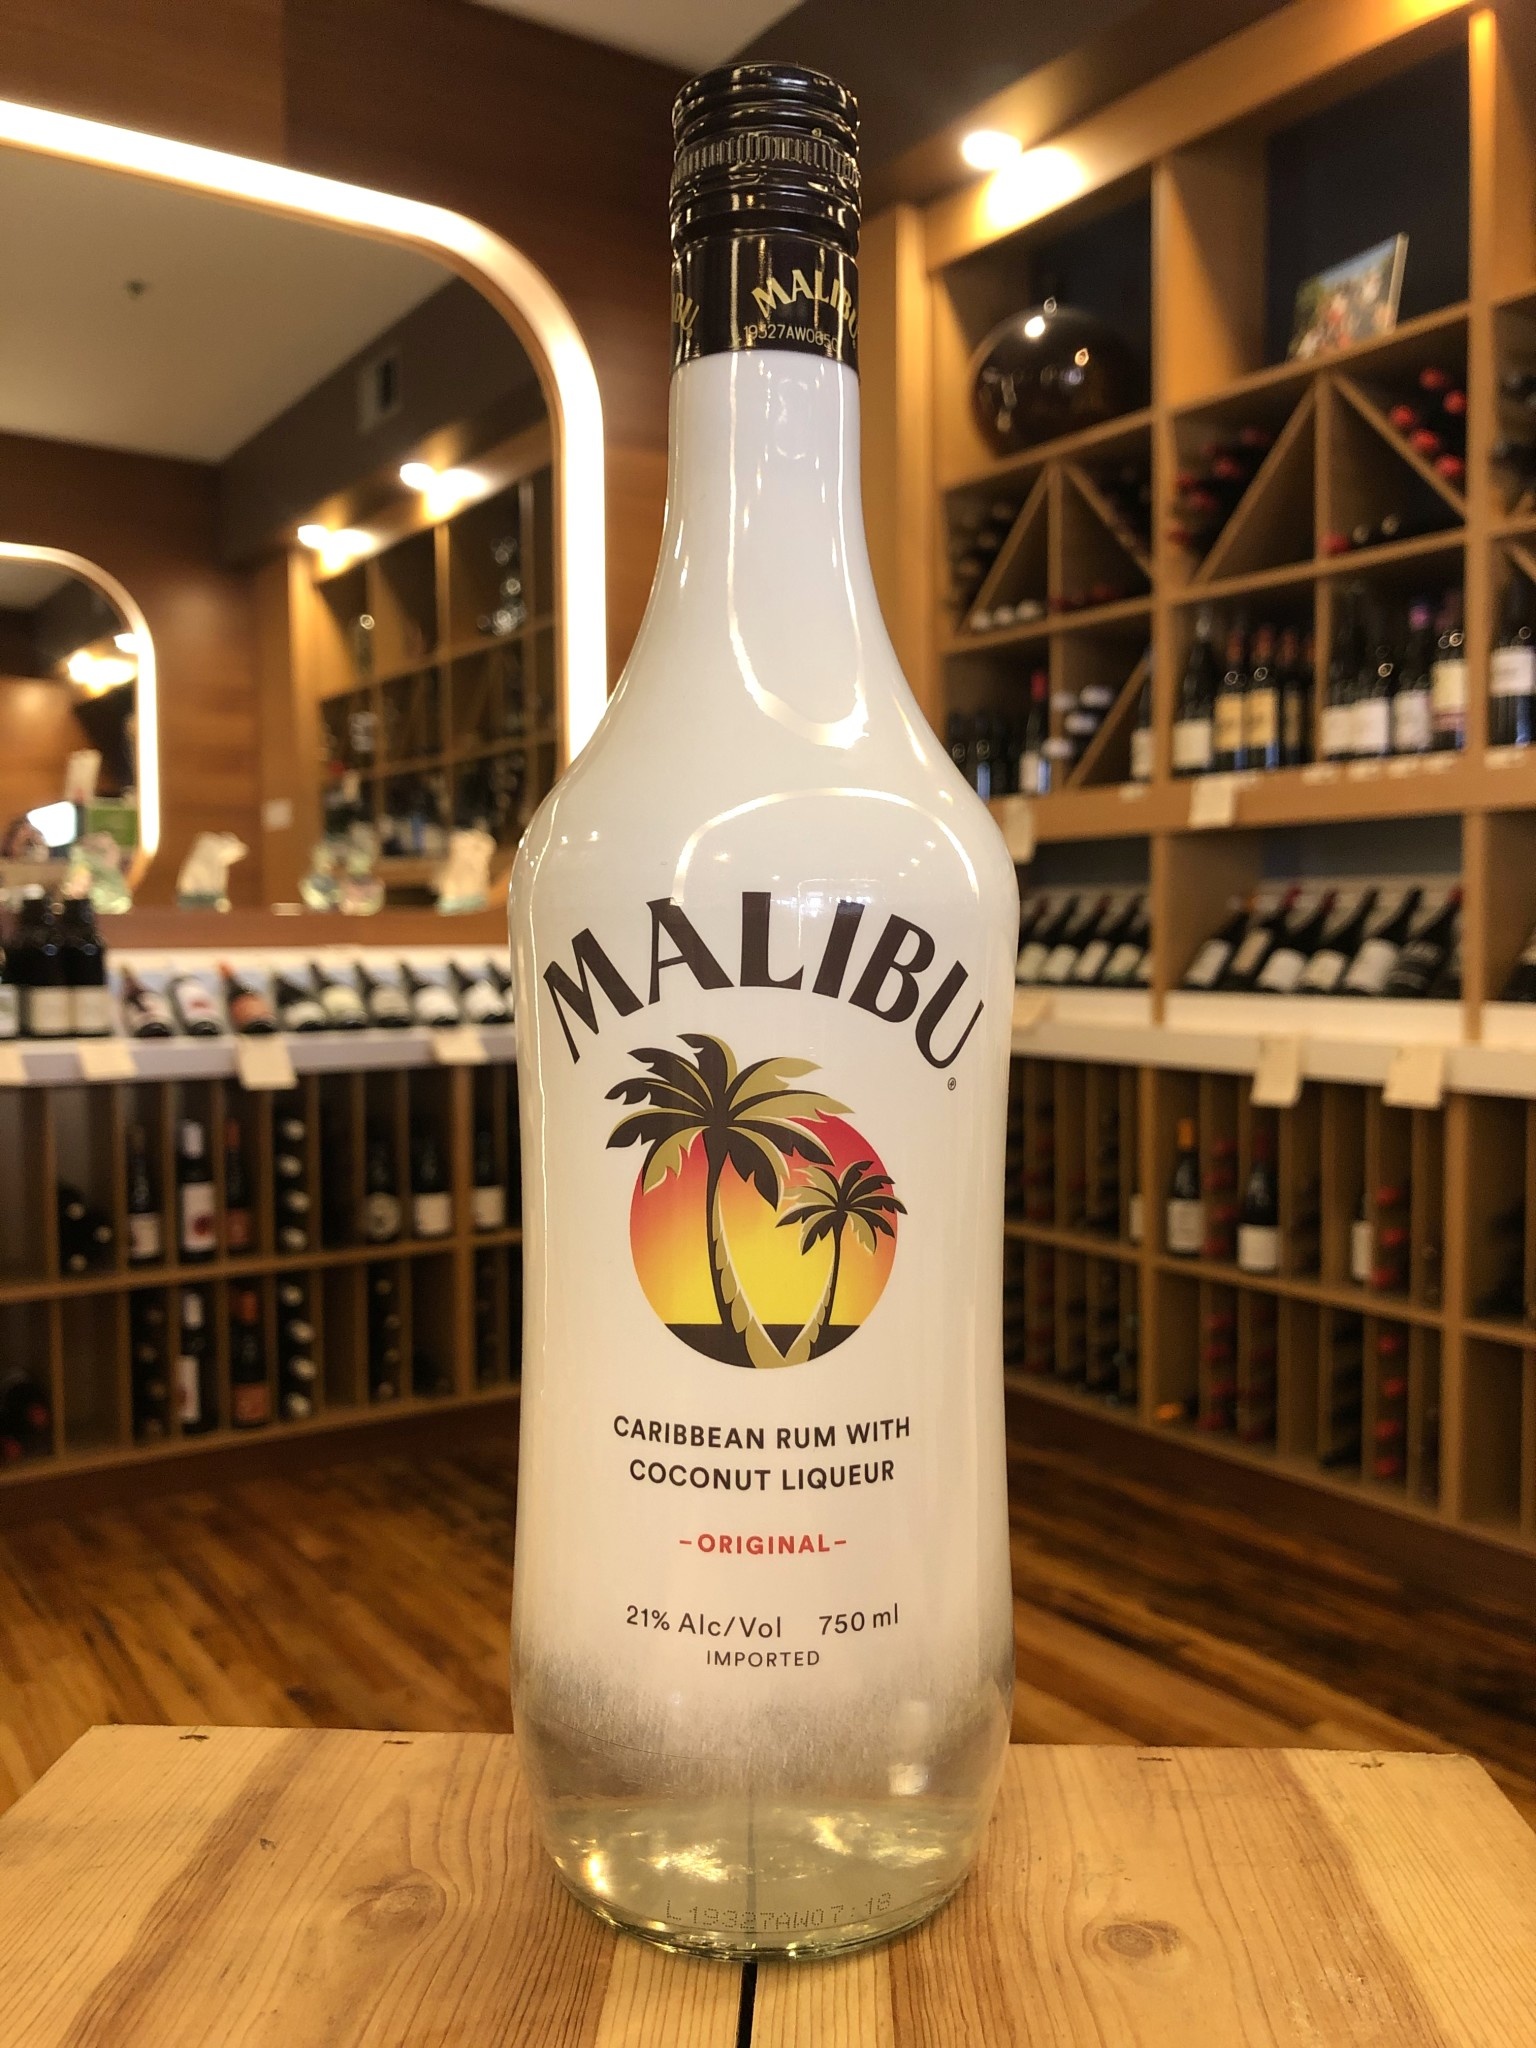 Malibu Coconut Liqueur Drinks / Malibu Coconut Rum Liqueur ...